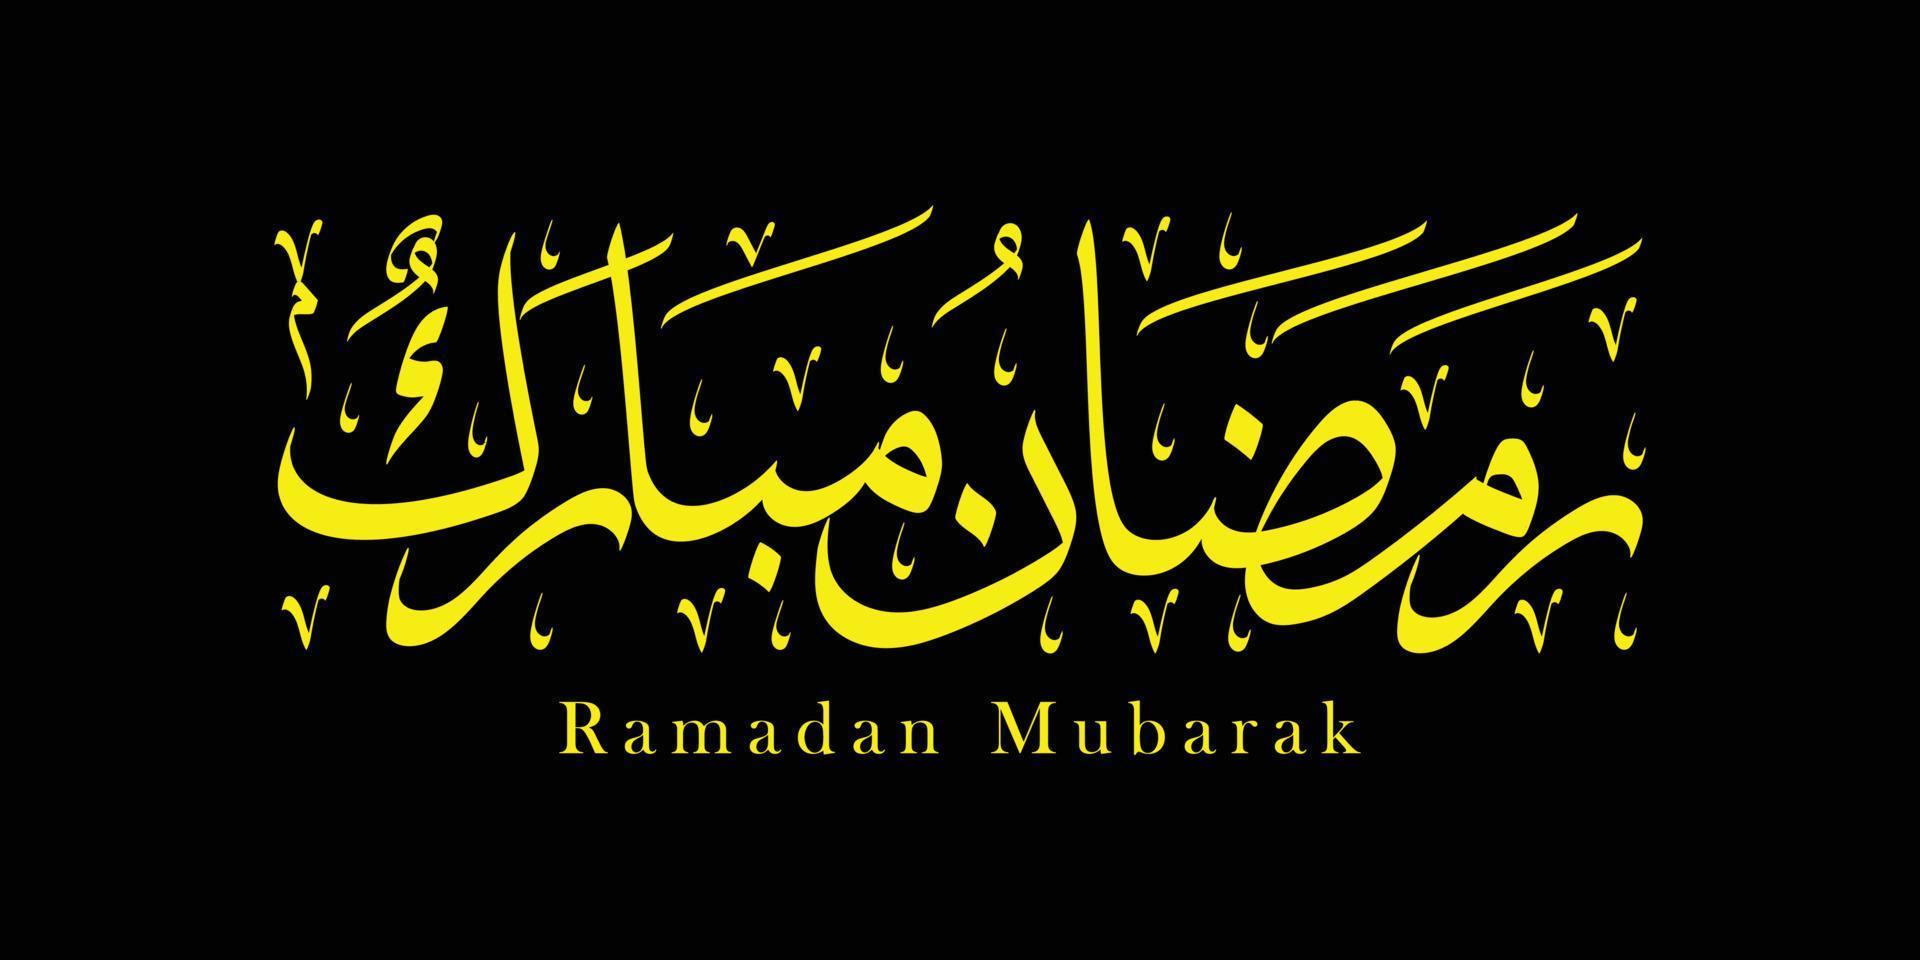 Ramadan Mubarak Arabic calligraphy in yellow color and black background vector